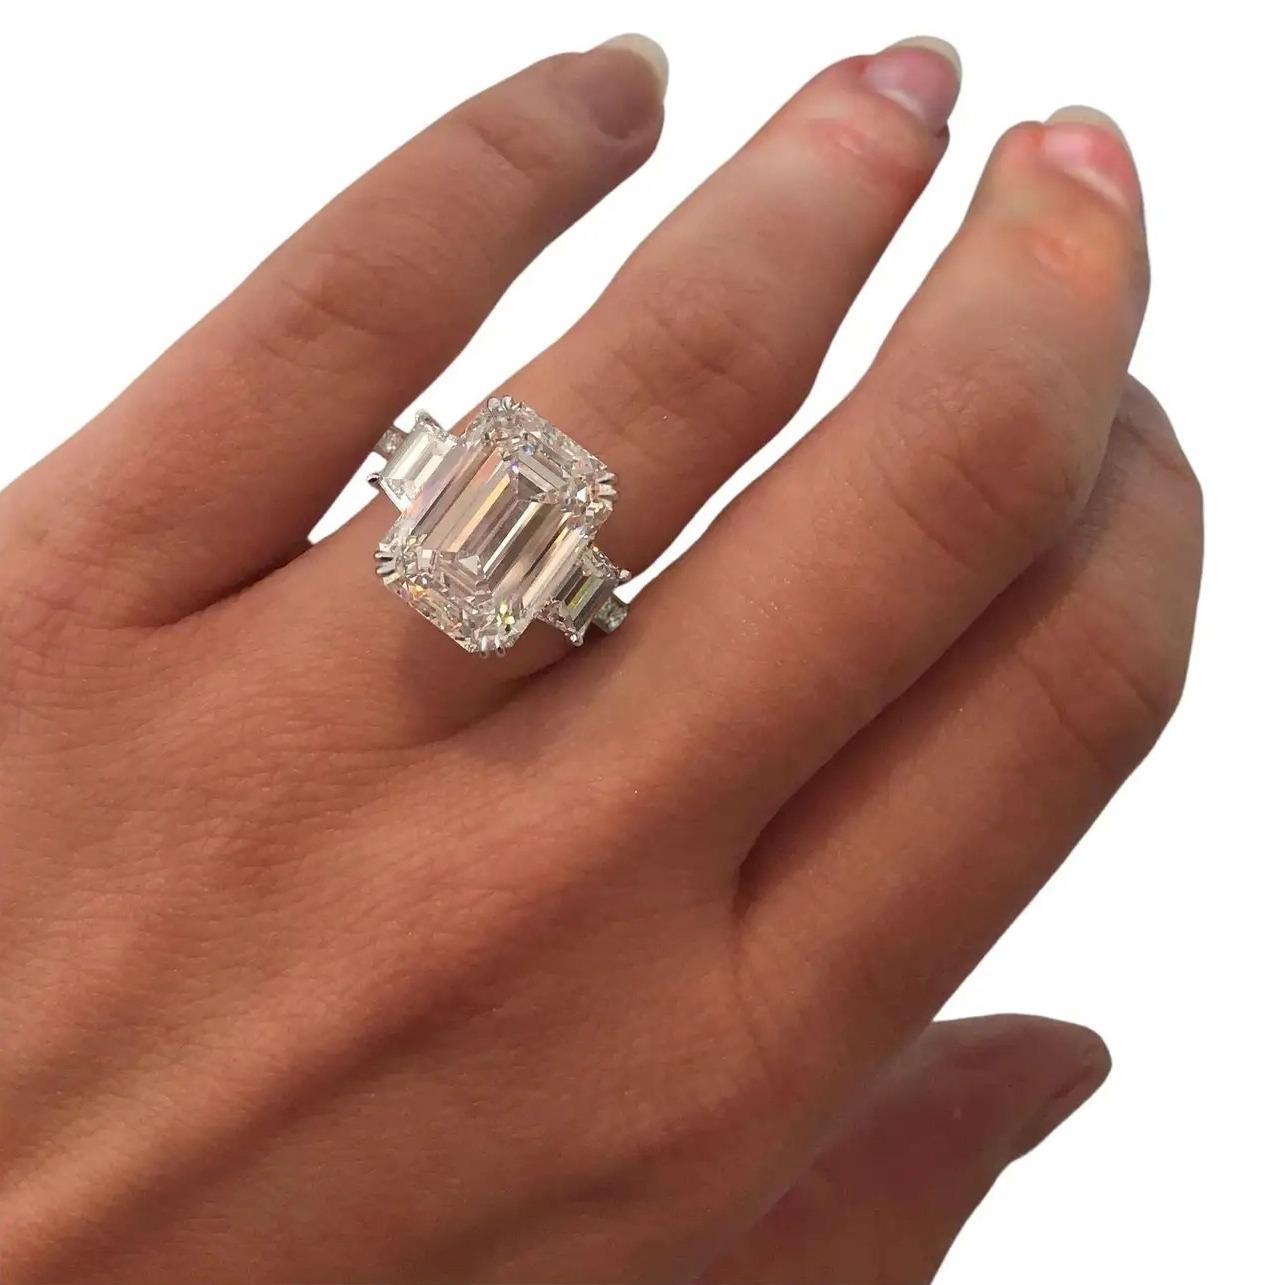 4 ct emerald cut diamond ring